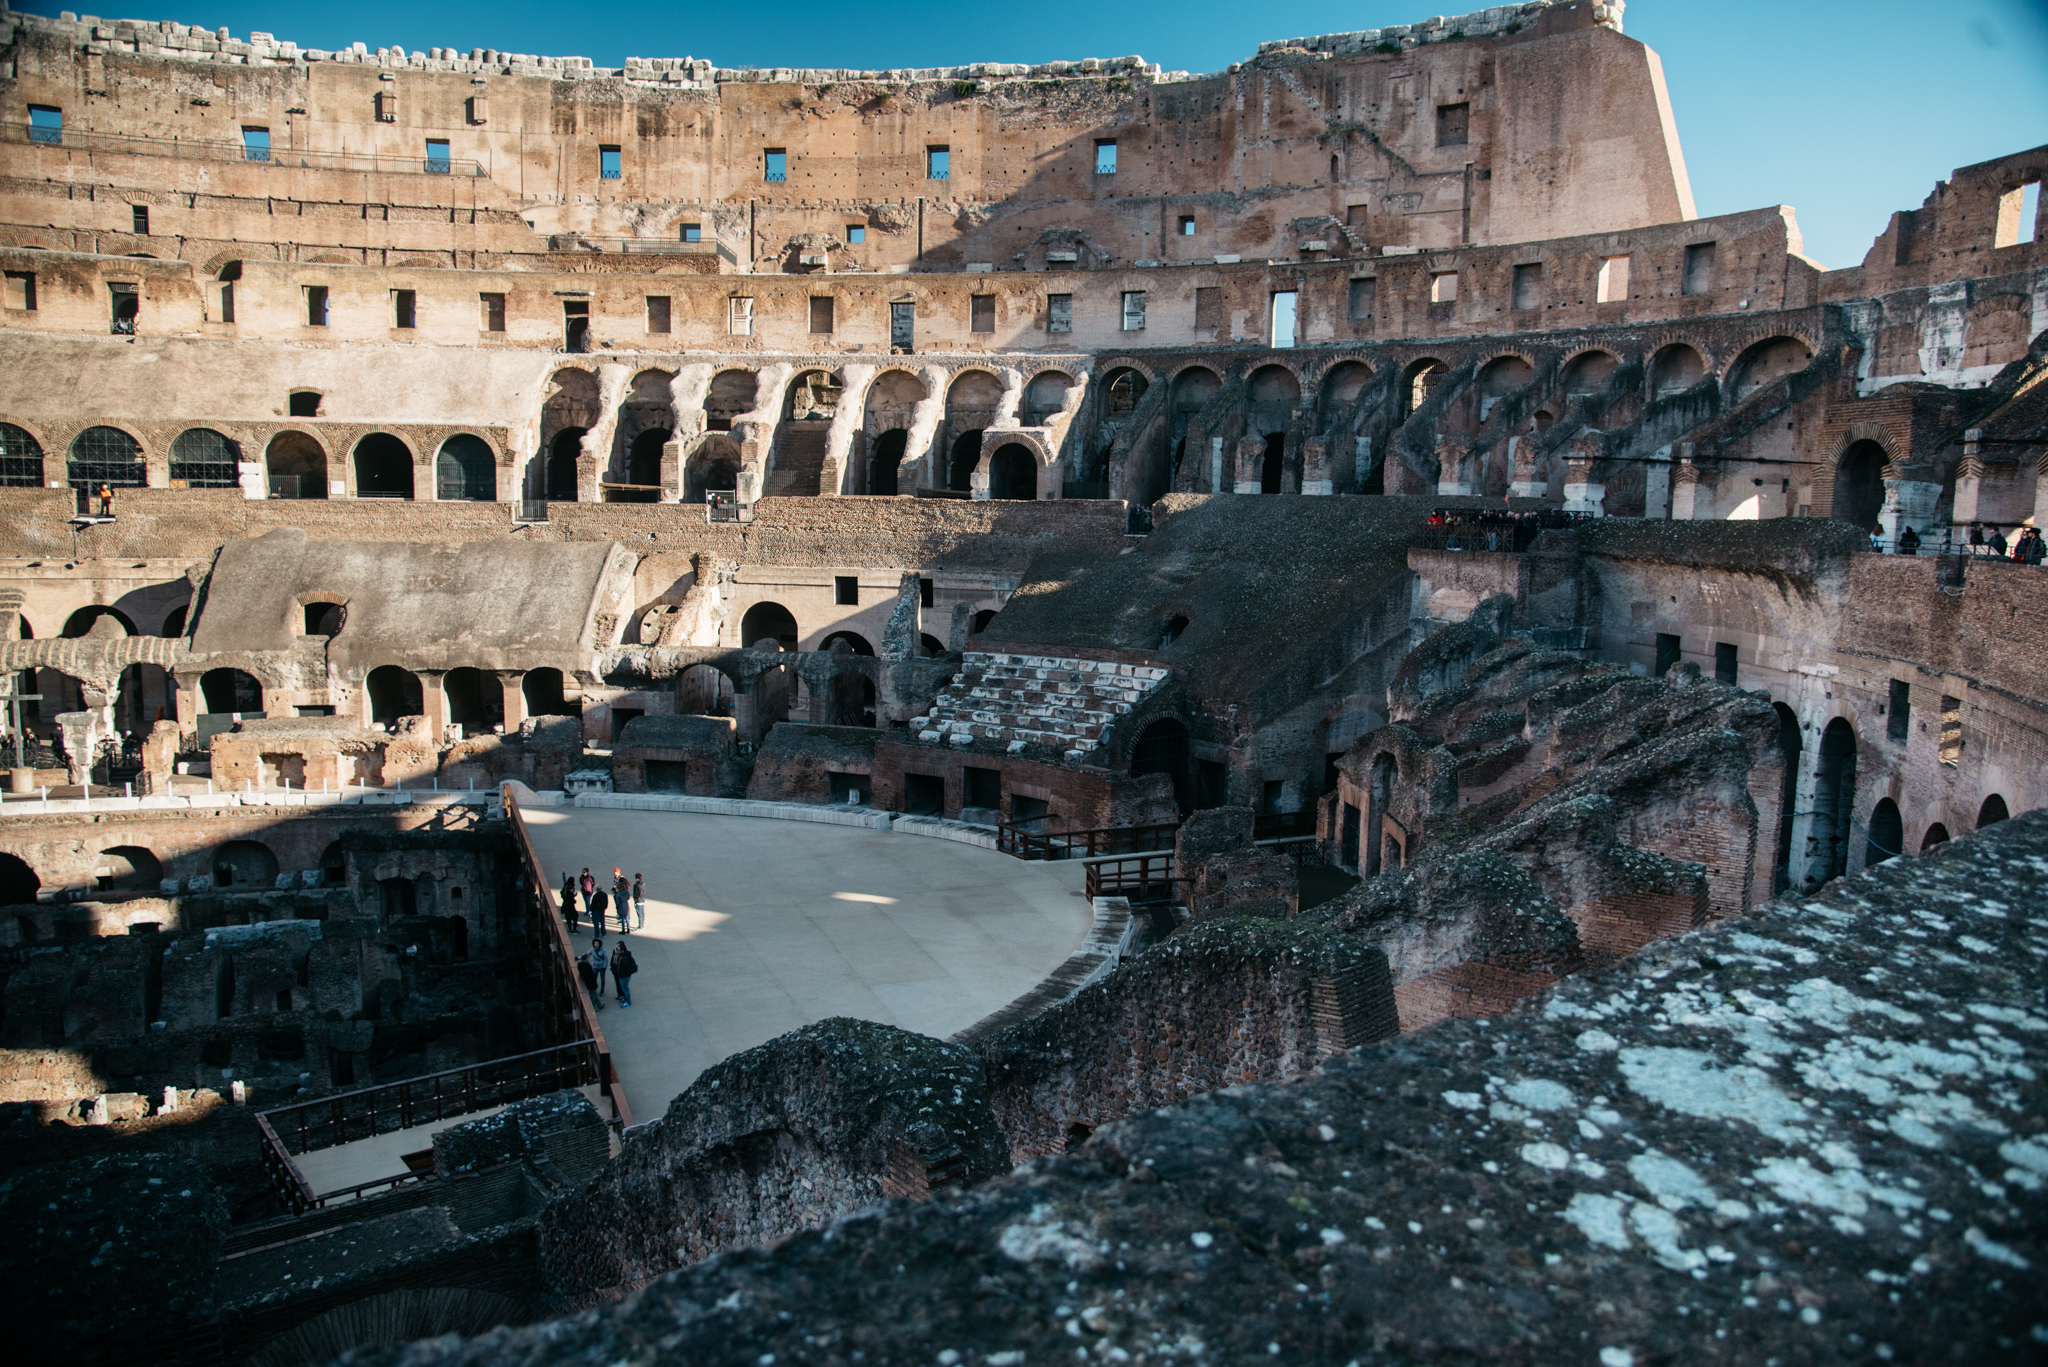 The Colosseum 